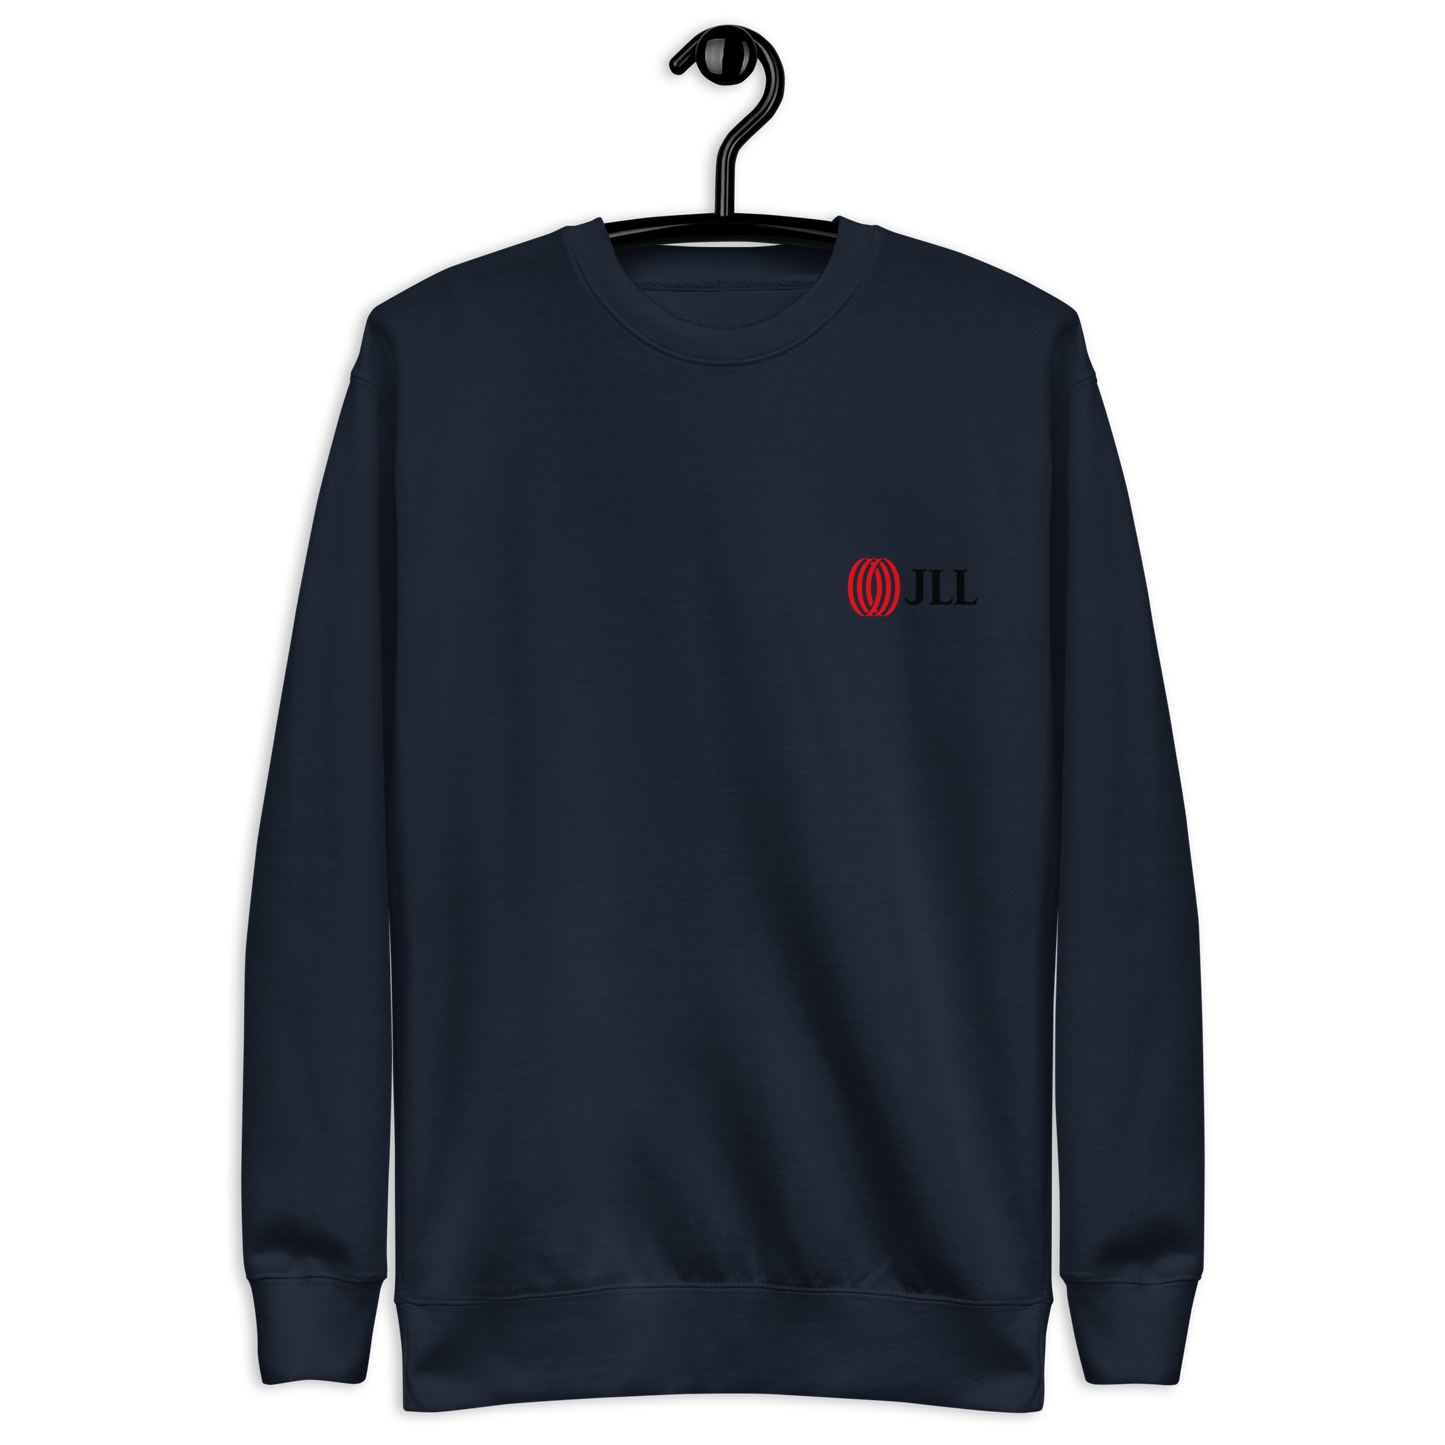 JLL Unisex Premium Sweatshirt